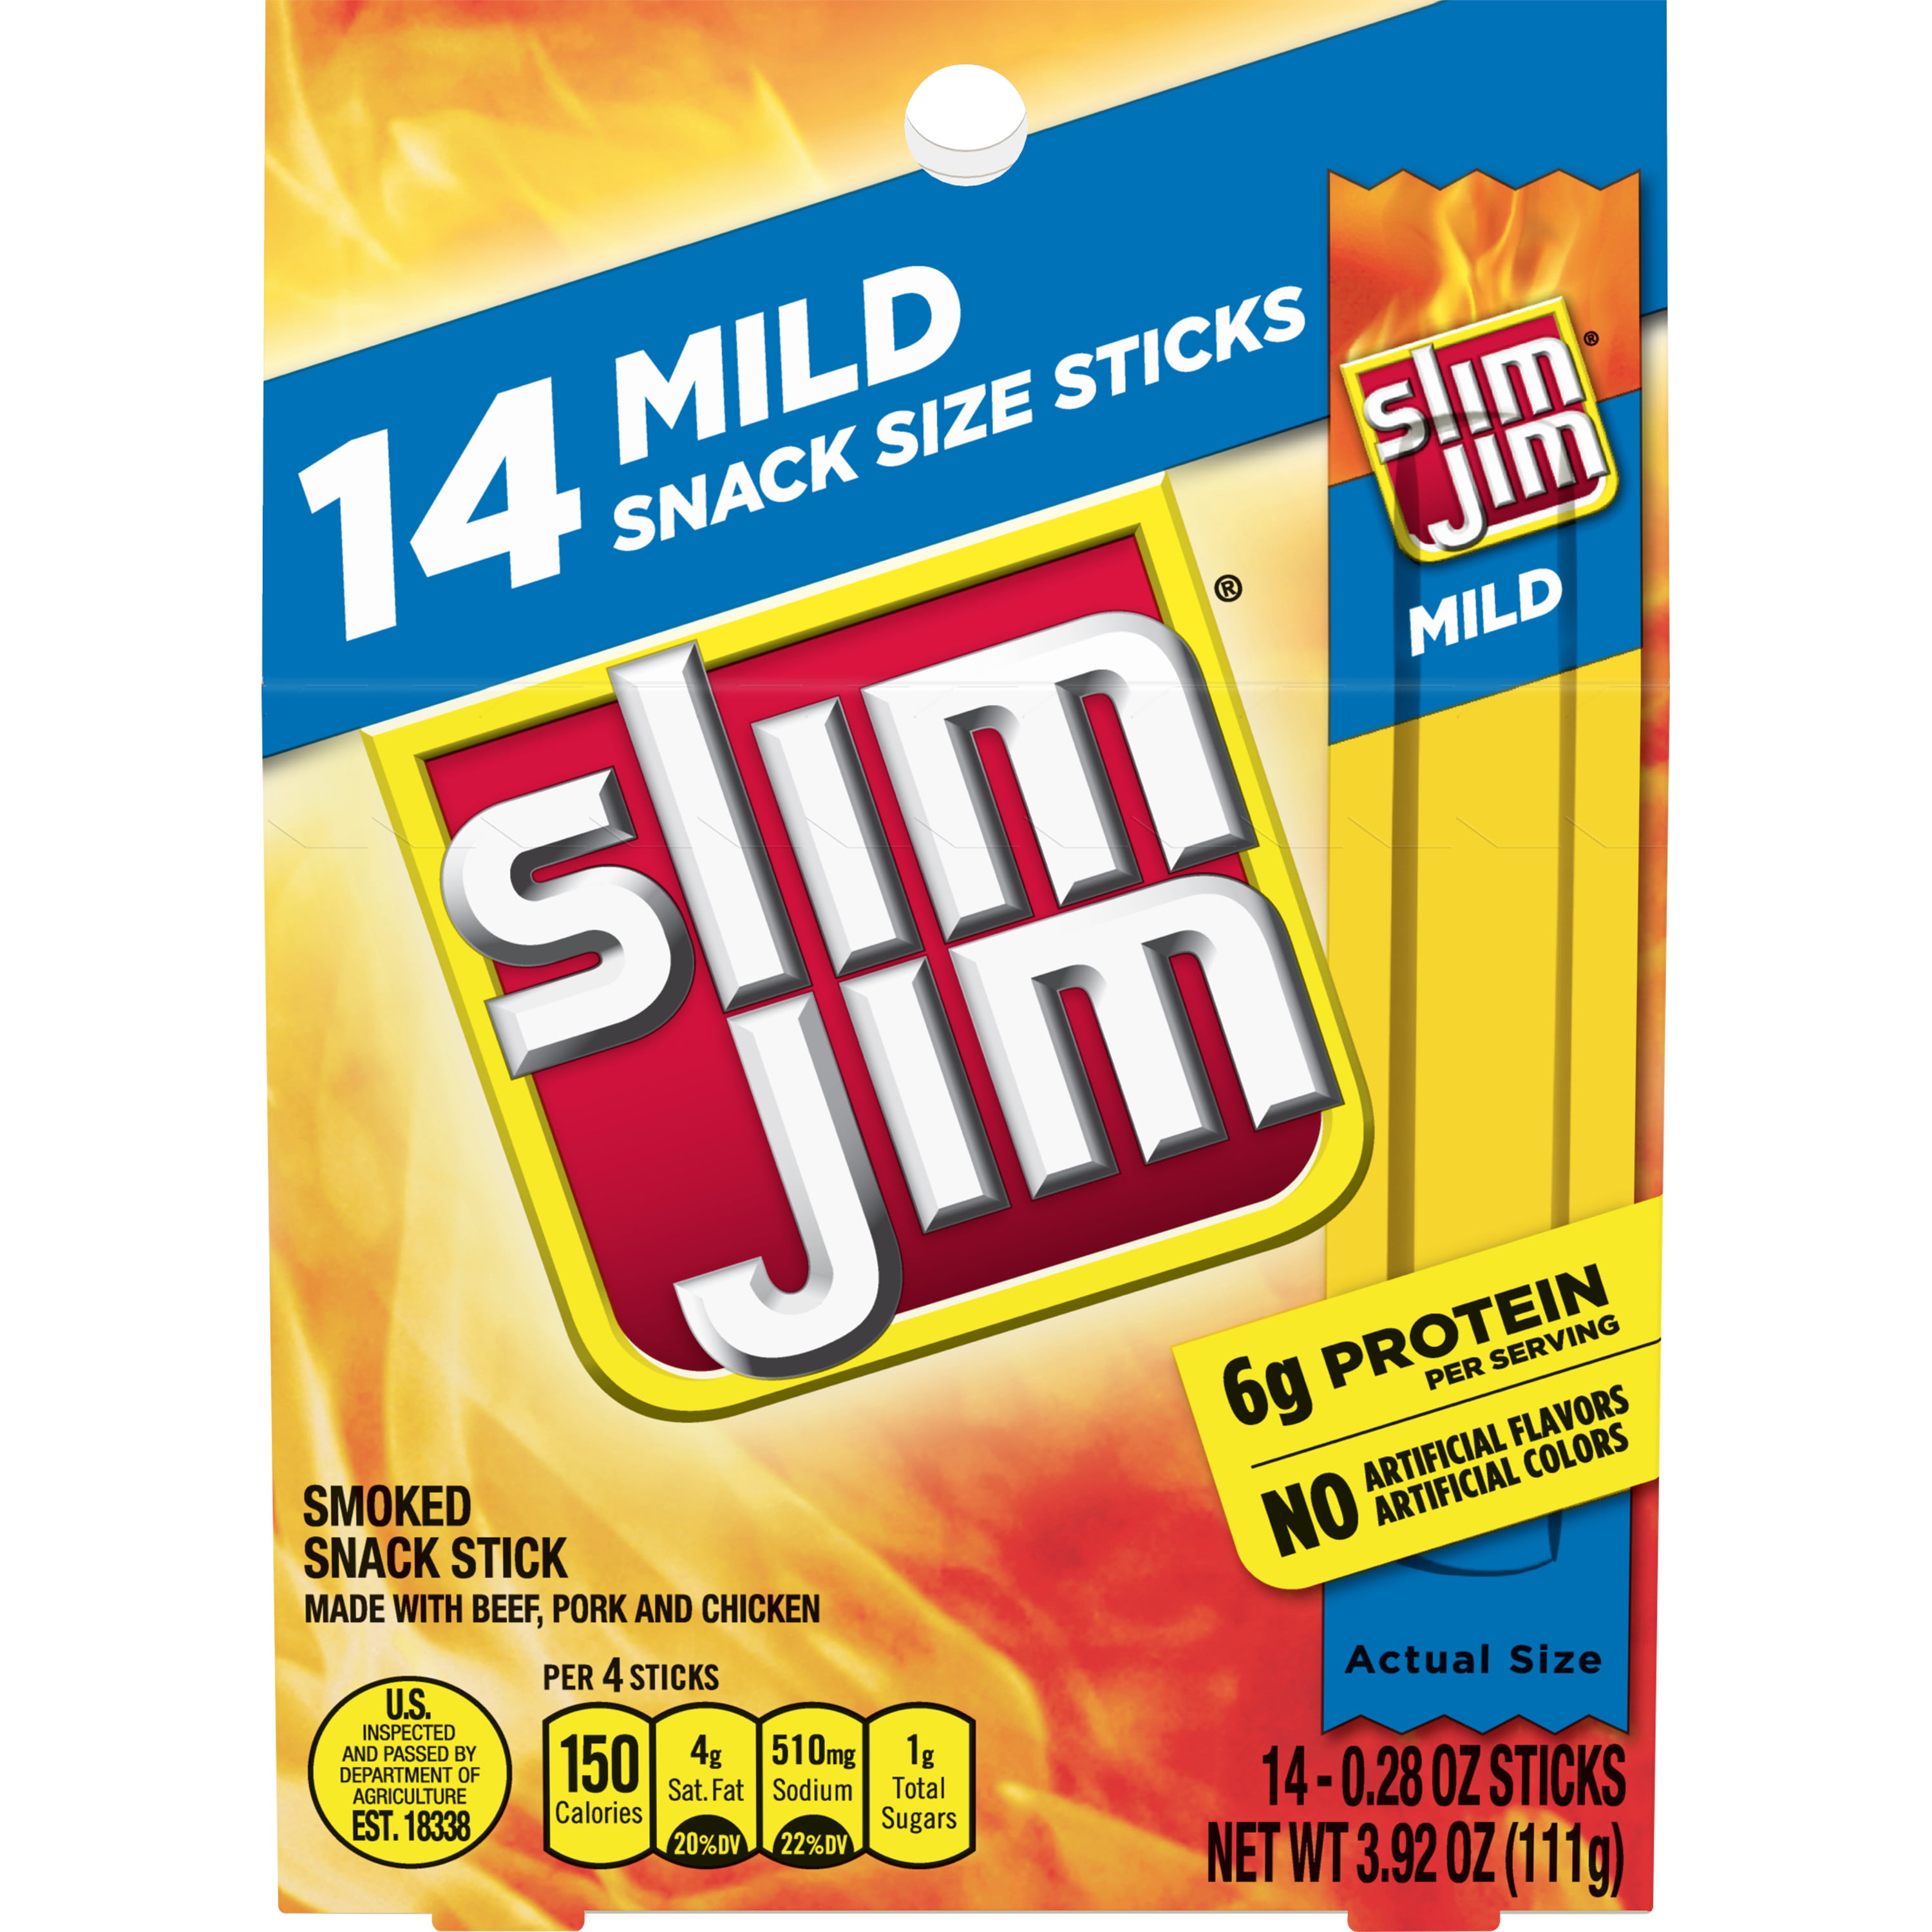 keto diet and slim jims